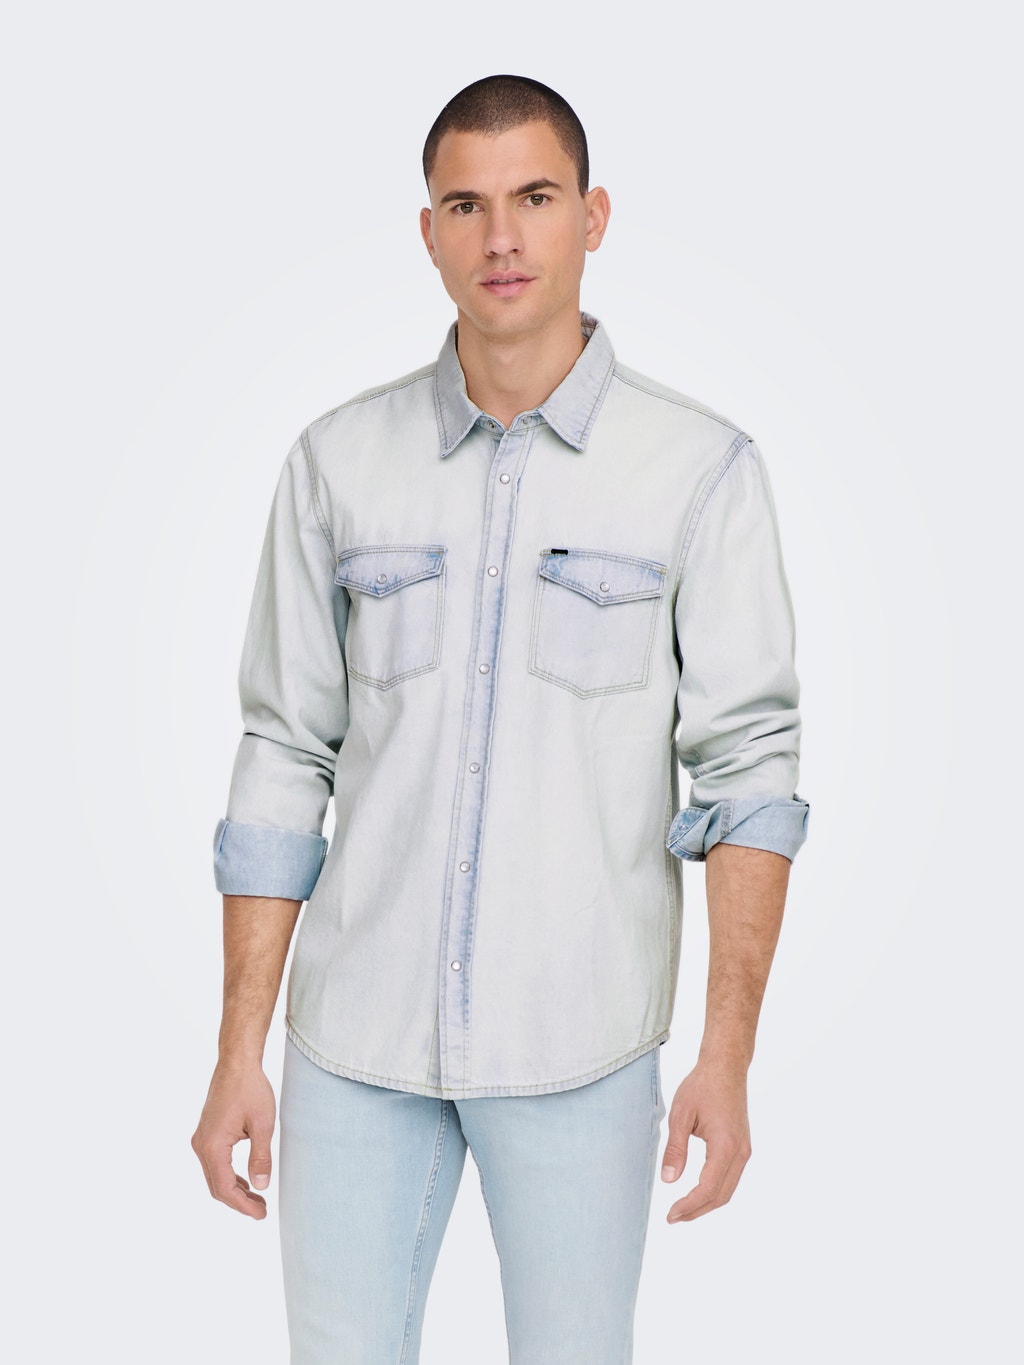 taburete télex pañuelo de papel Camisas Corte regular Cuello de camisa | Azul claro | ONLY & SONS®